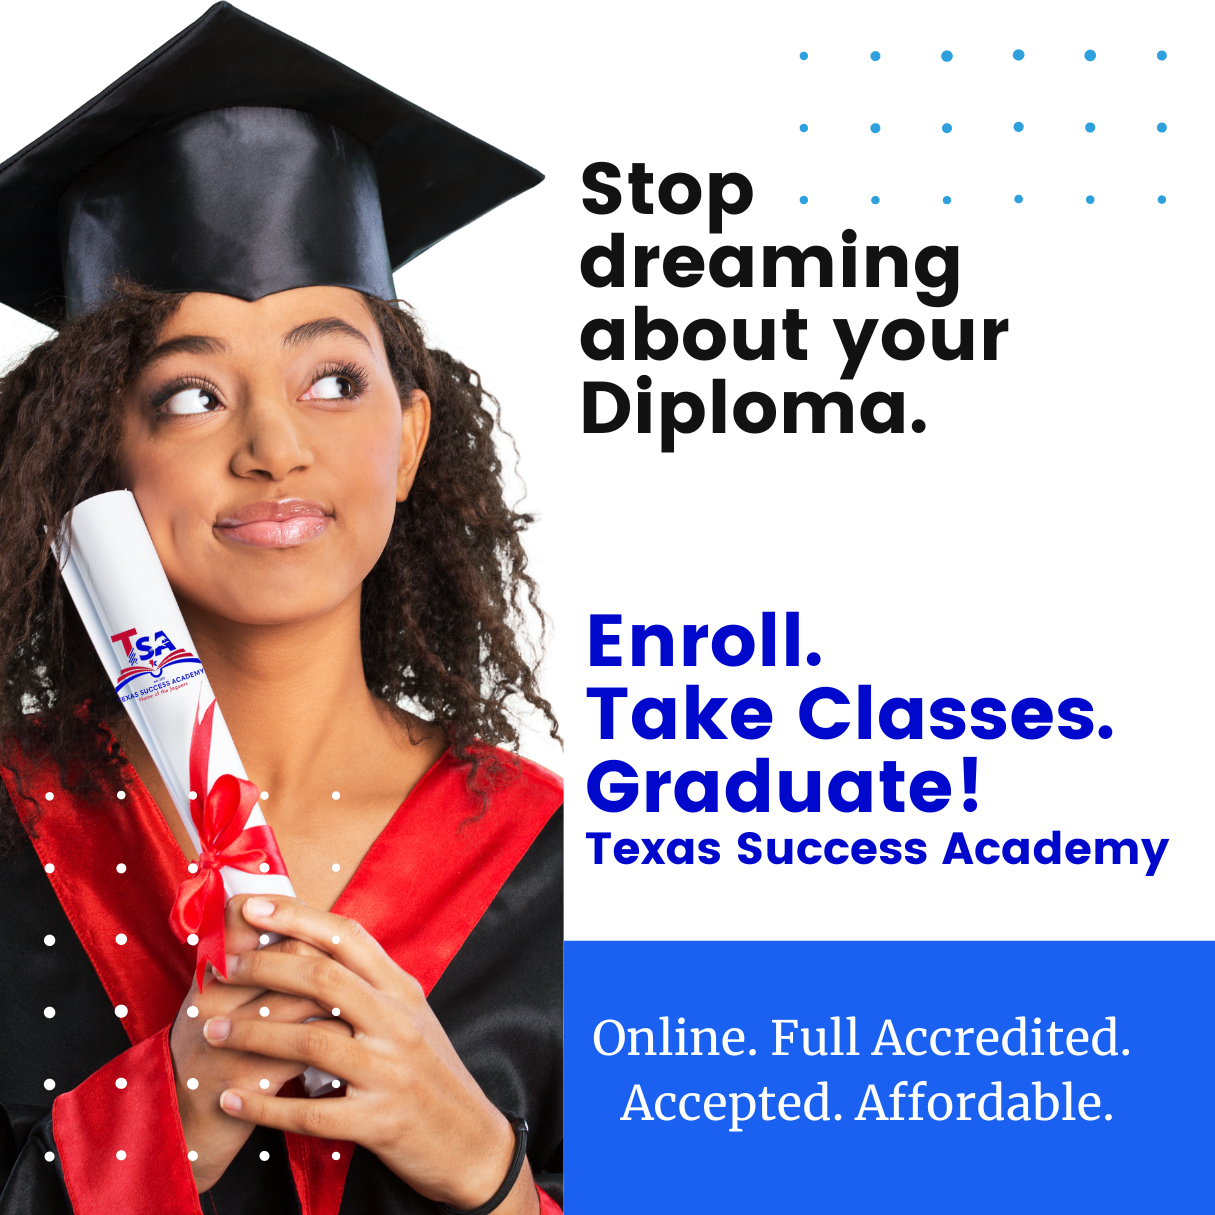 Graduate online Accredited